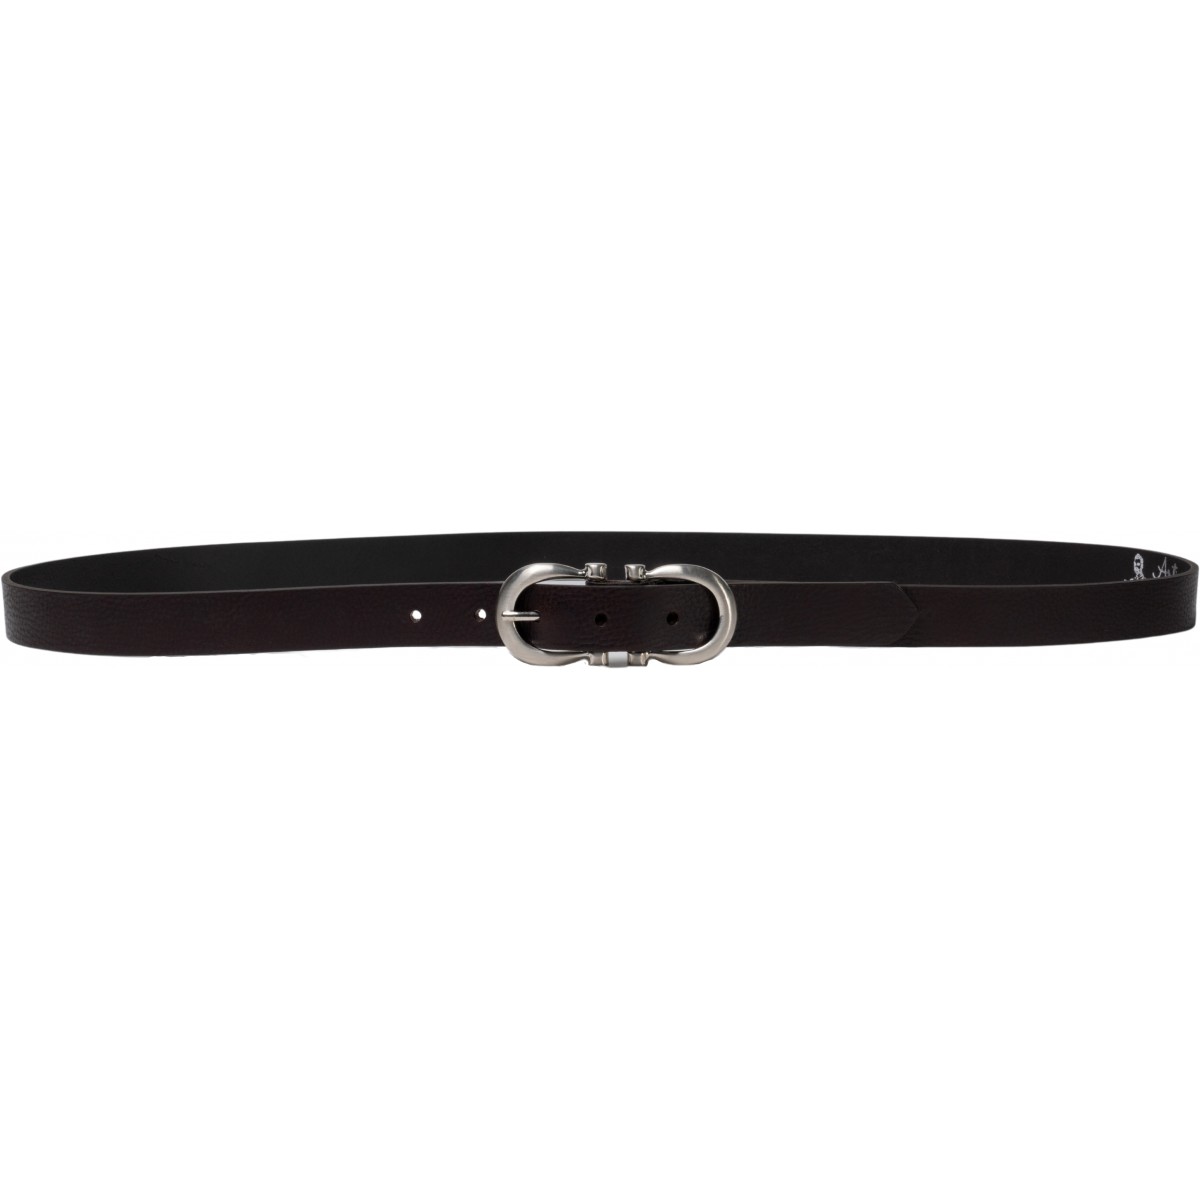 Handmade dark brown leather belt with metal figure eight buckle | The ...